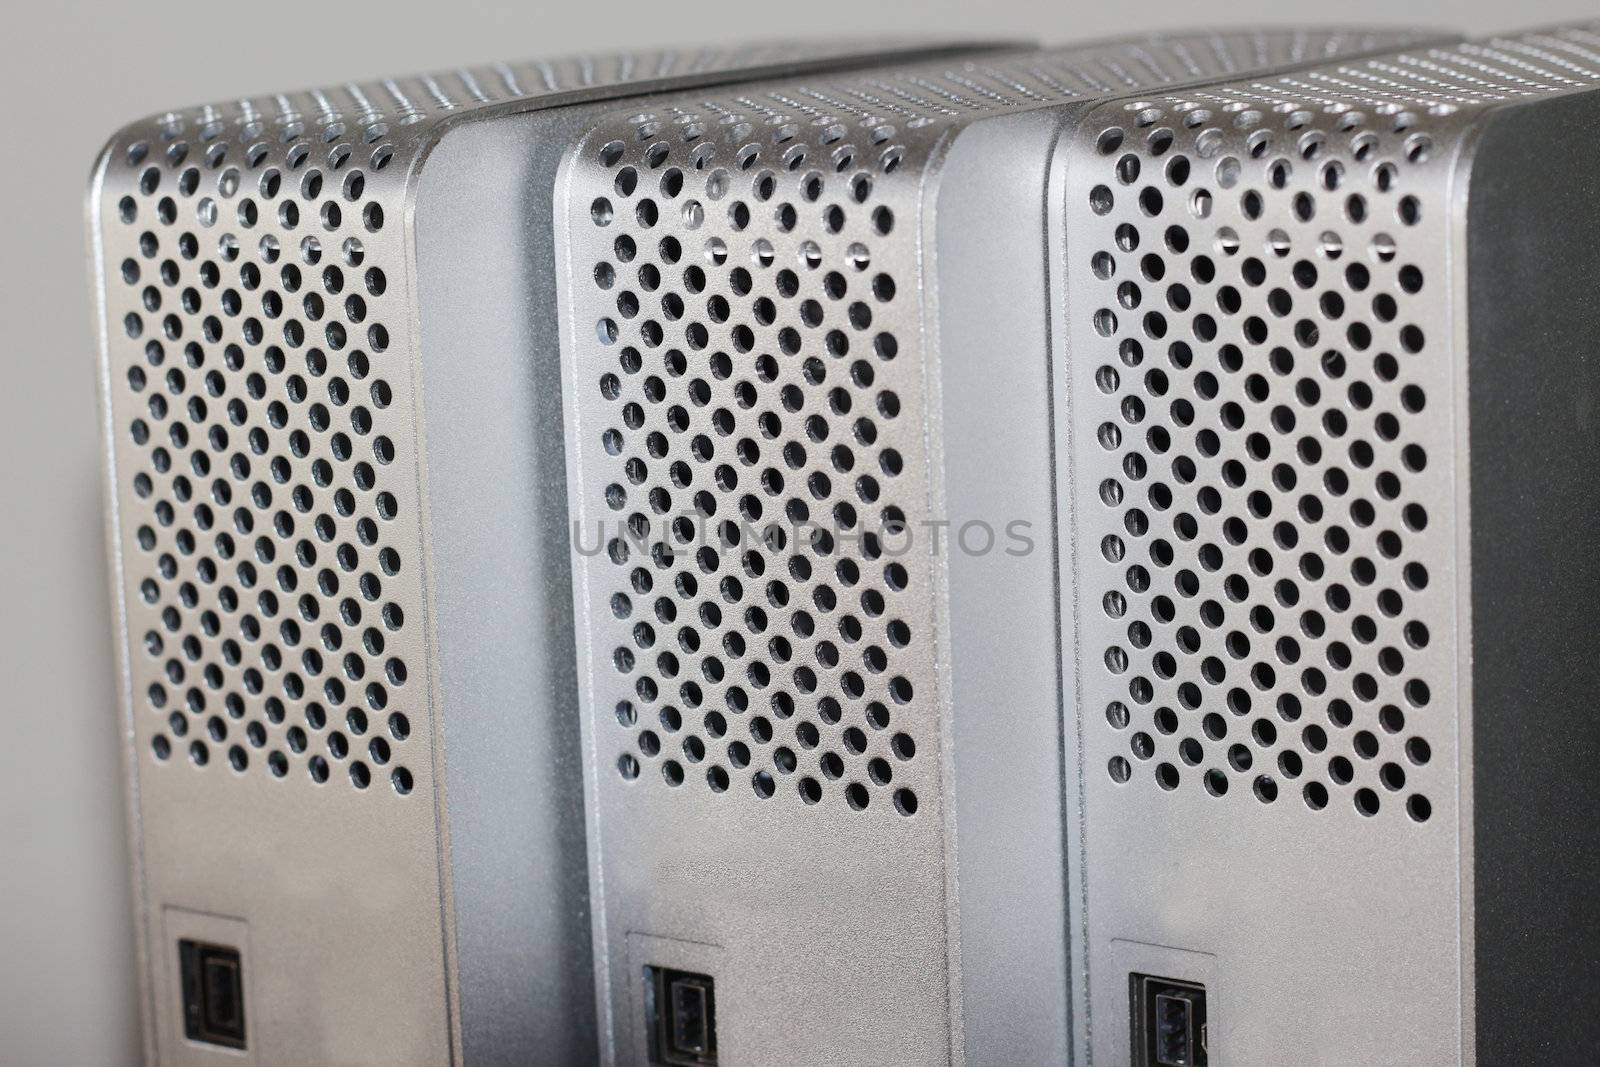 External metal hard drives symbolizing storage solutions